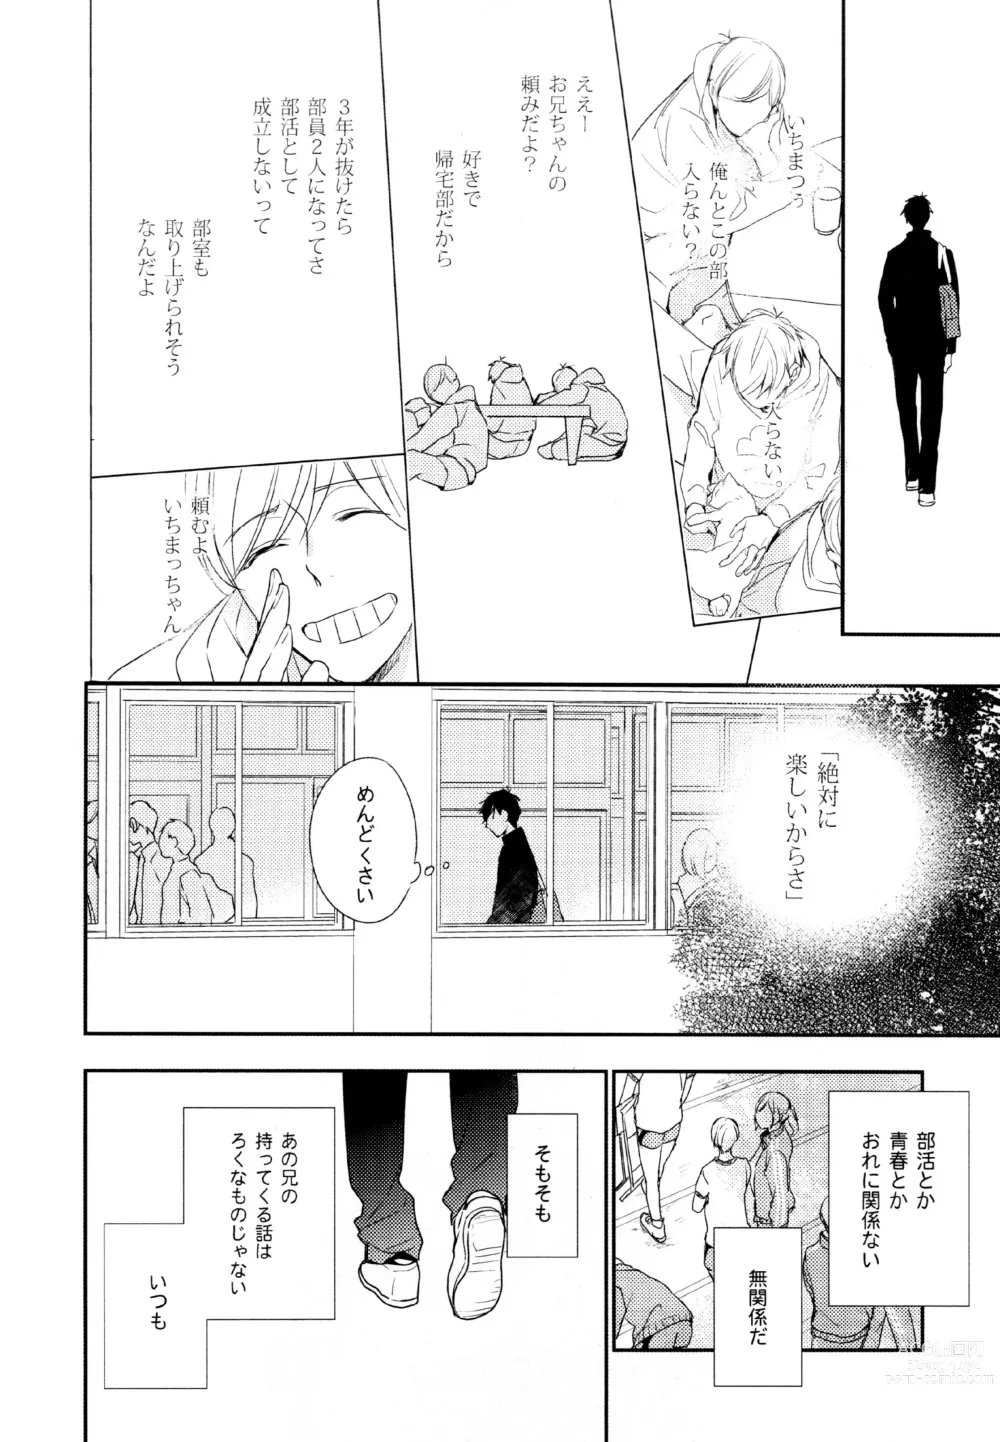 Page 7 of doujinshi Hikari ni Tsuite